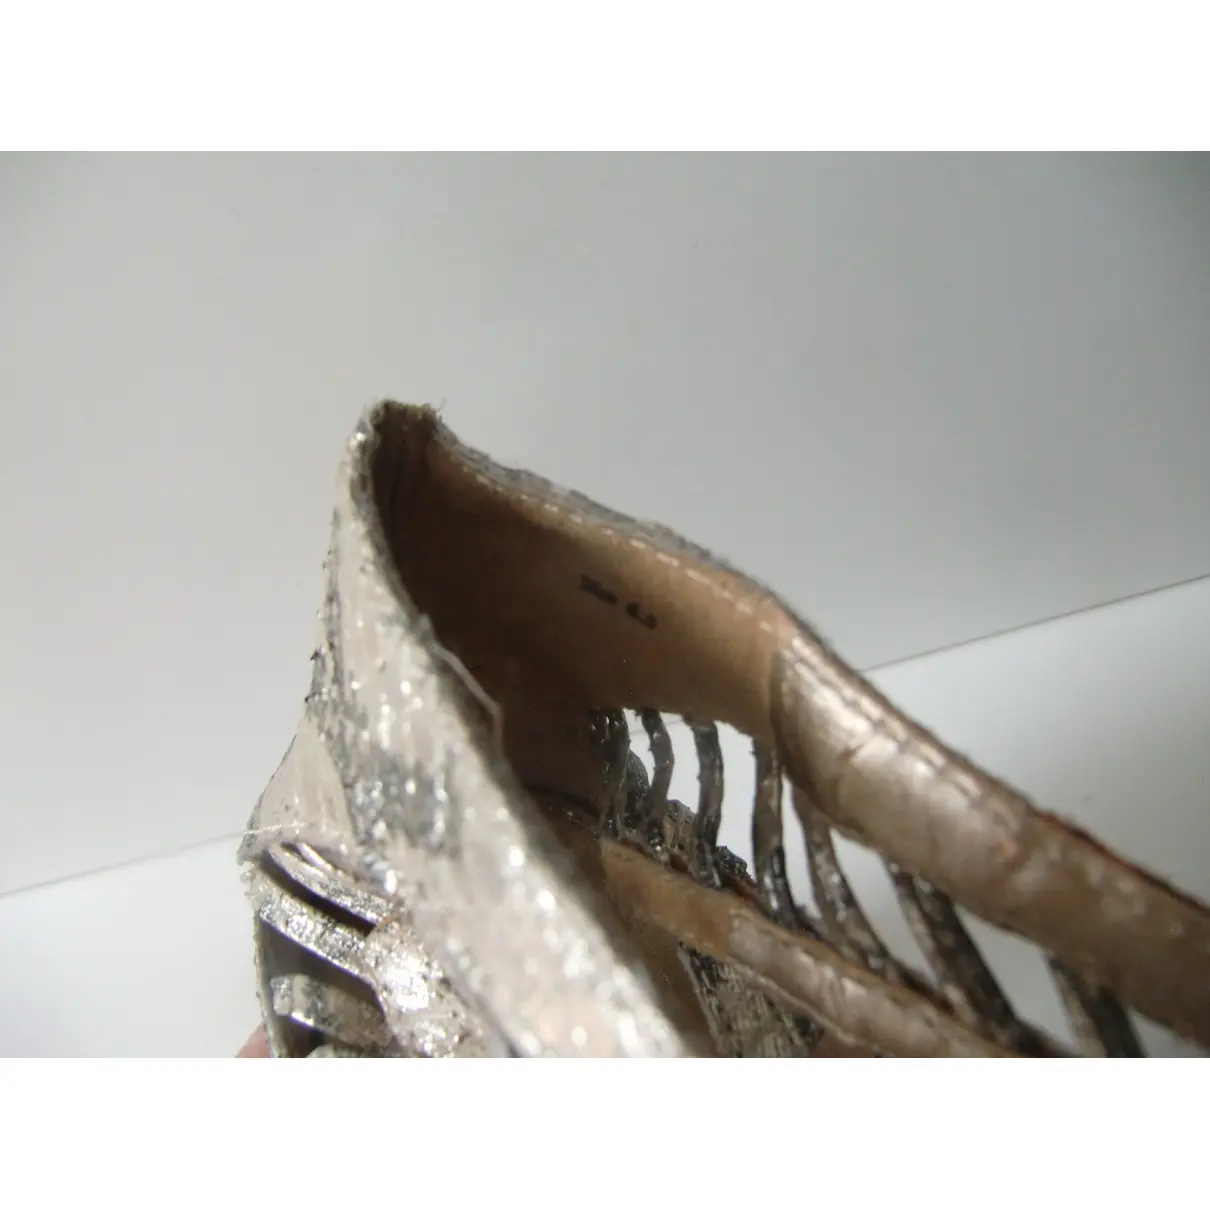 Leather heels Dolce Vita